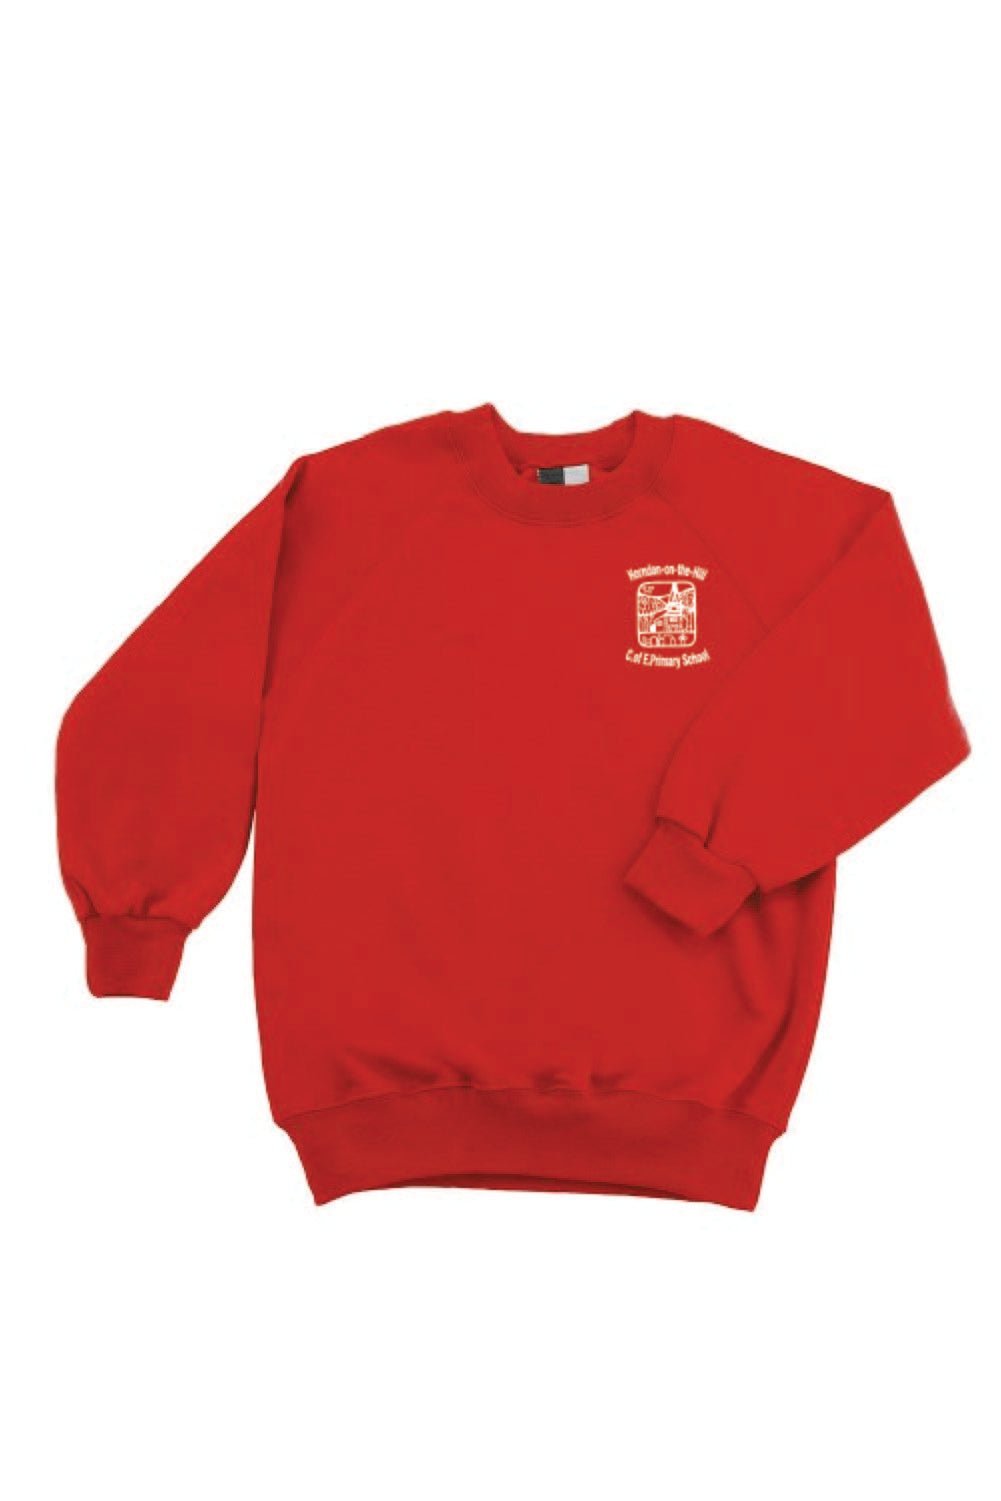 Horndon-on-the-Hill School Jumper - Uniformwise Schoolwear